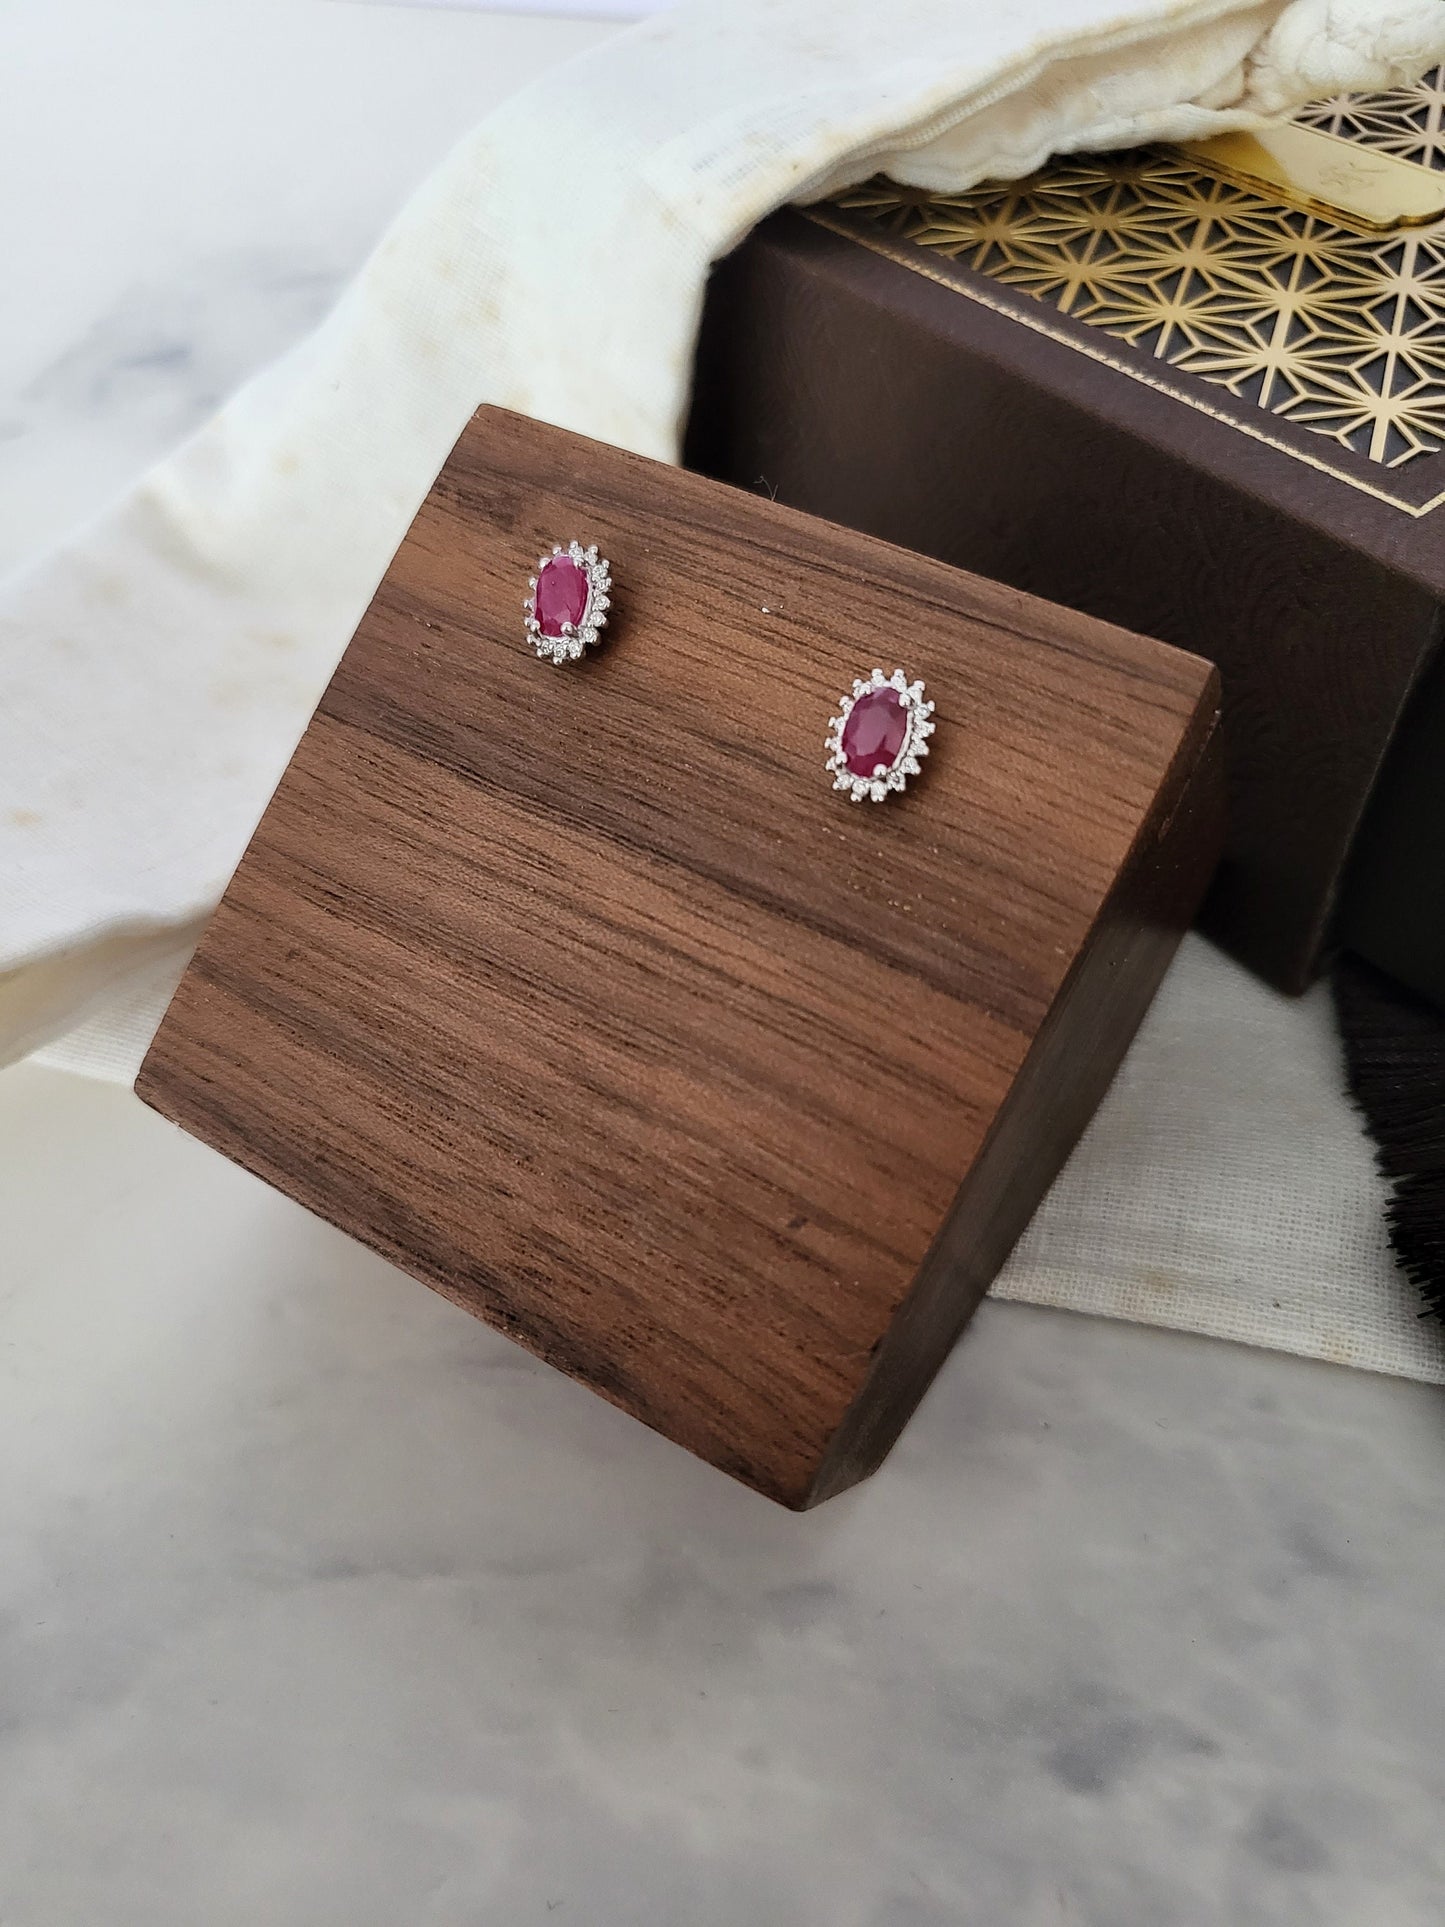 Natural Red Burma Ruby Rare Gemstone Earrings Cluster Setting Stud Silver Earrings